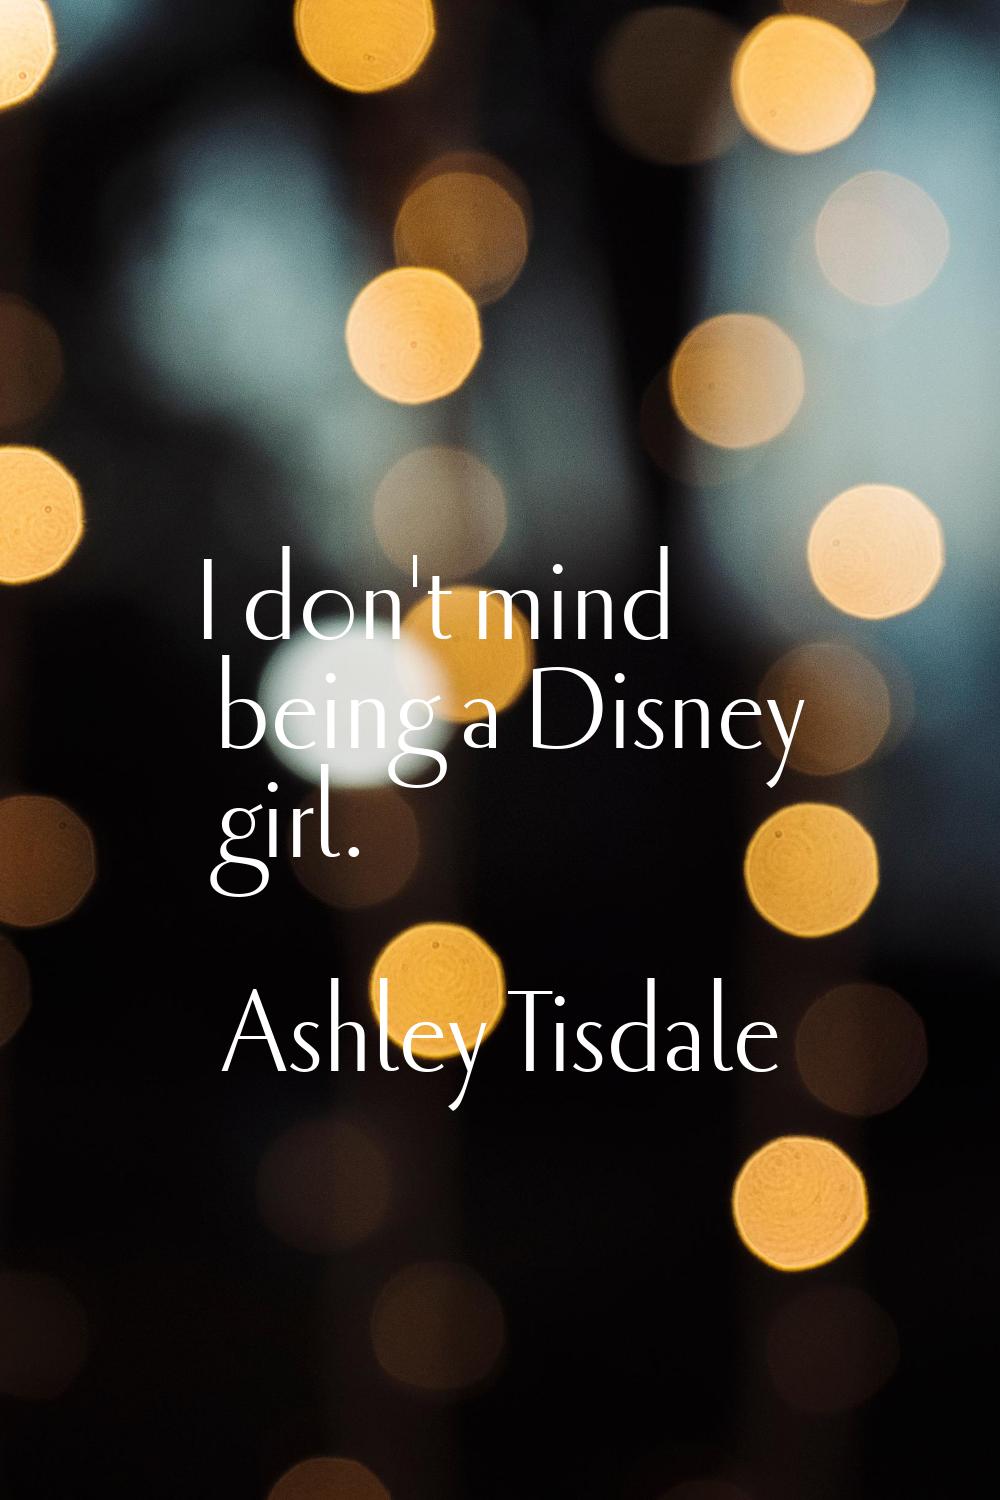 I don't mind being a Disney girl.